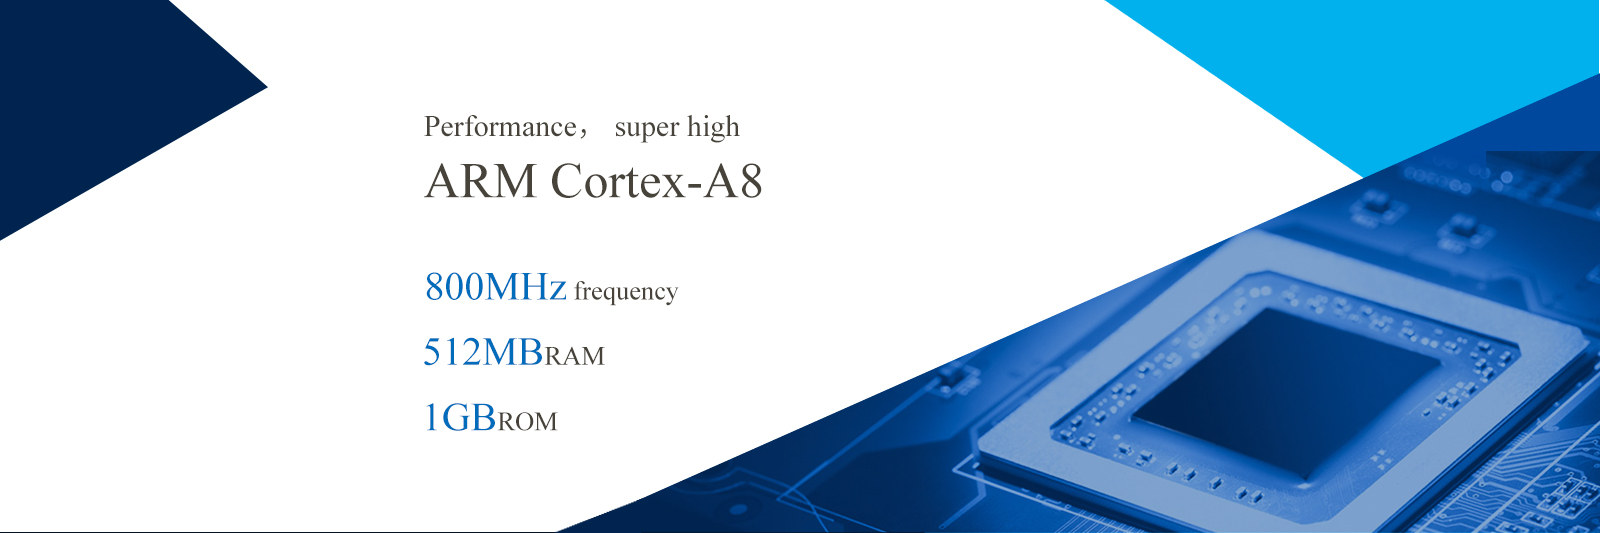 ARM Cortex-A8 processor